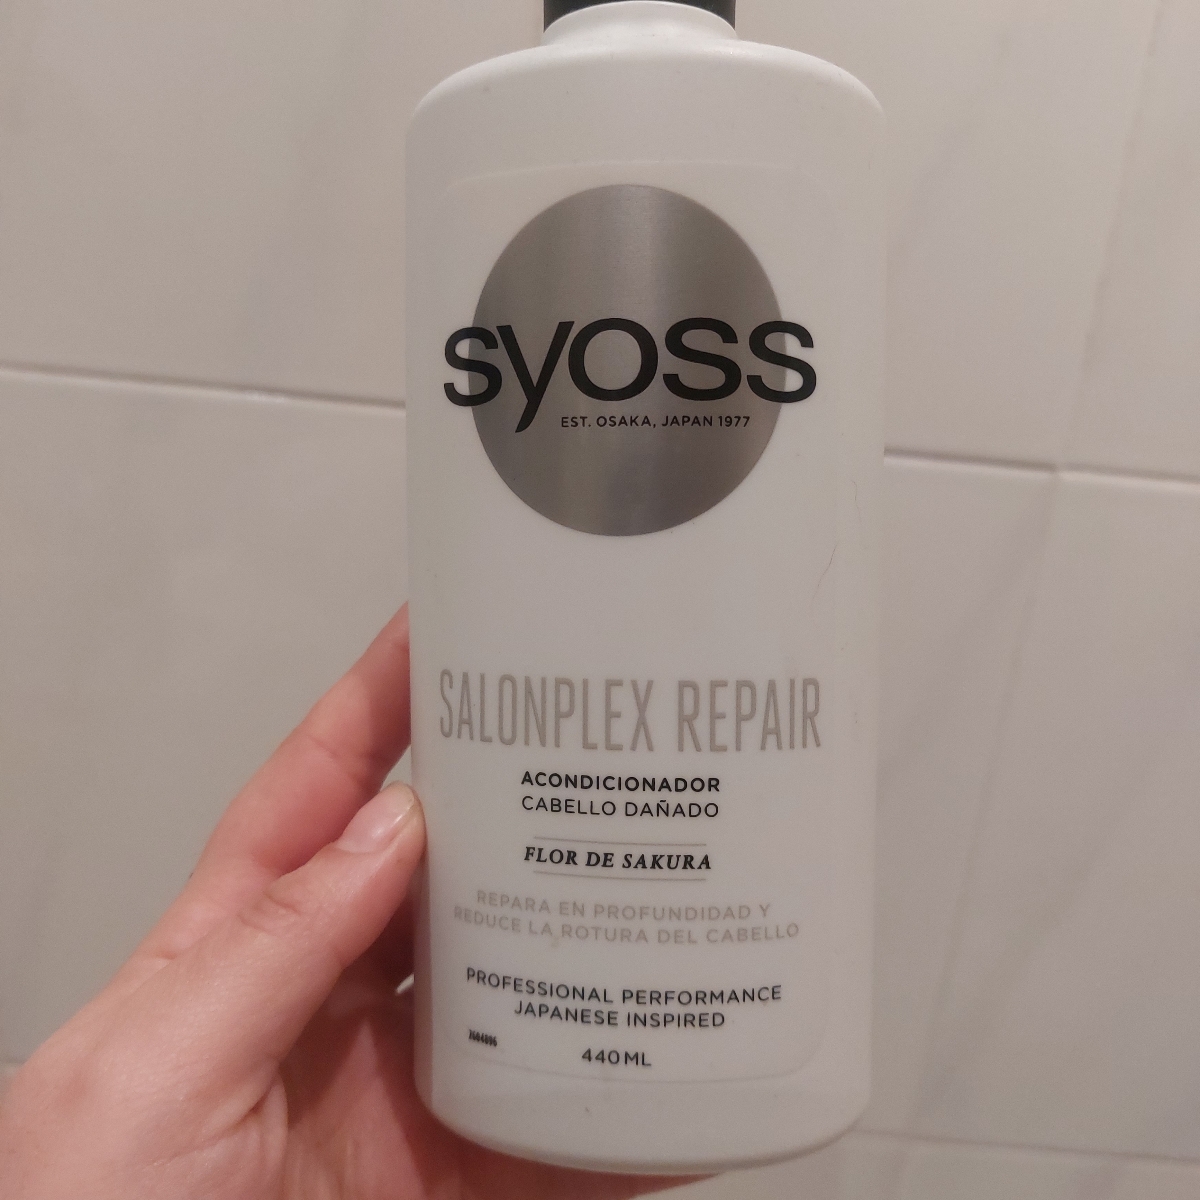 SYOSS Acondicionador Salonplex Repair Reviews | abillion